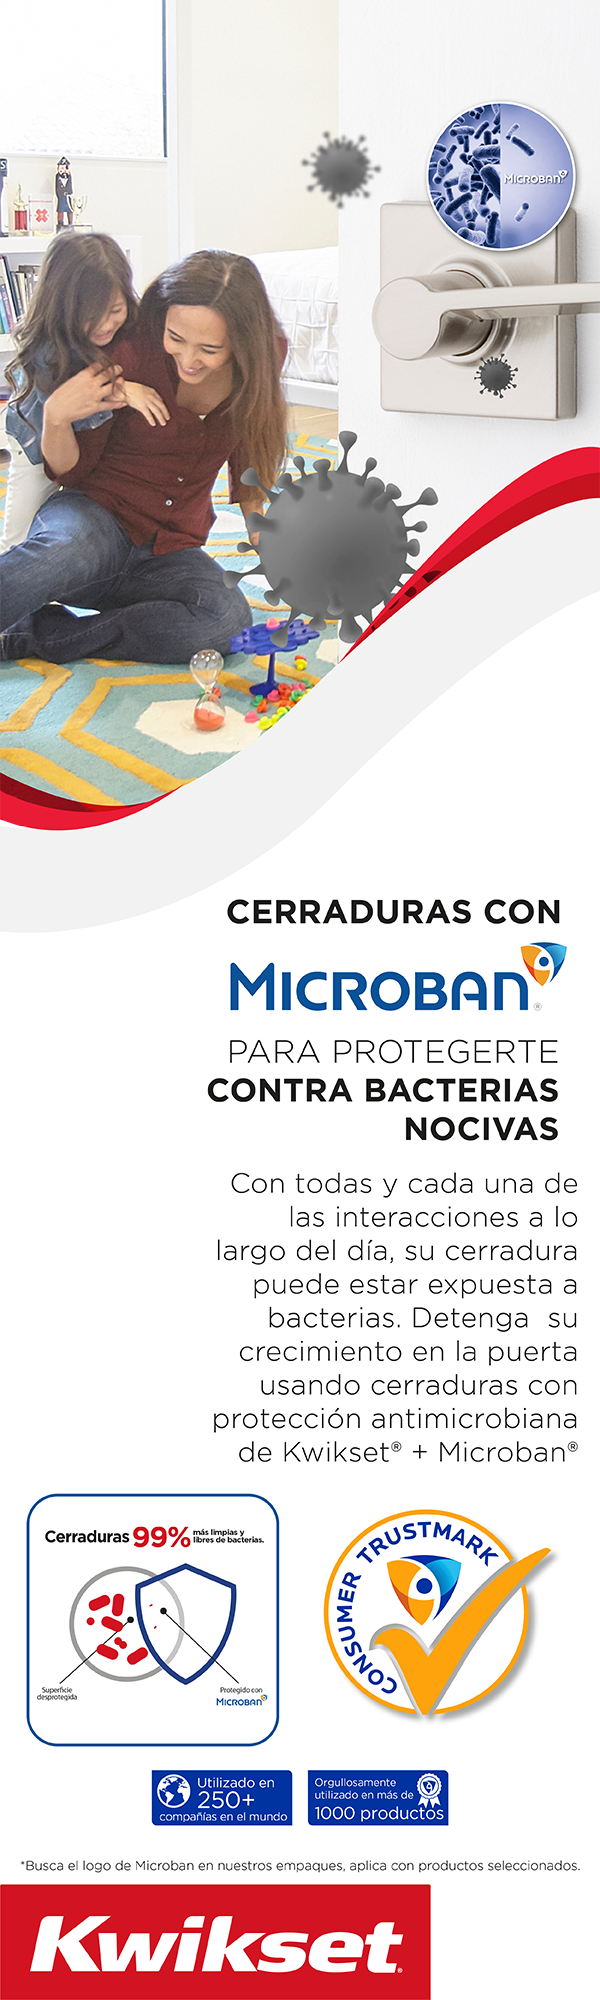 Kwikset Microban Home Depot México